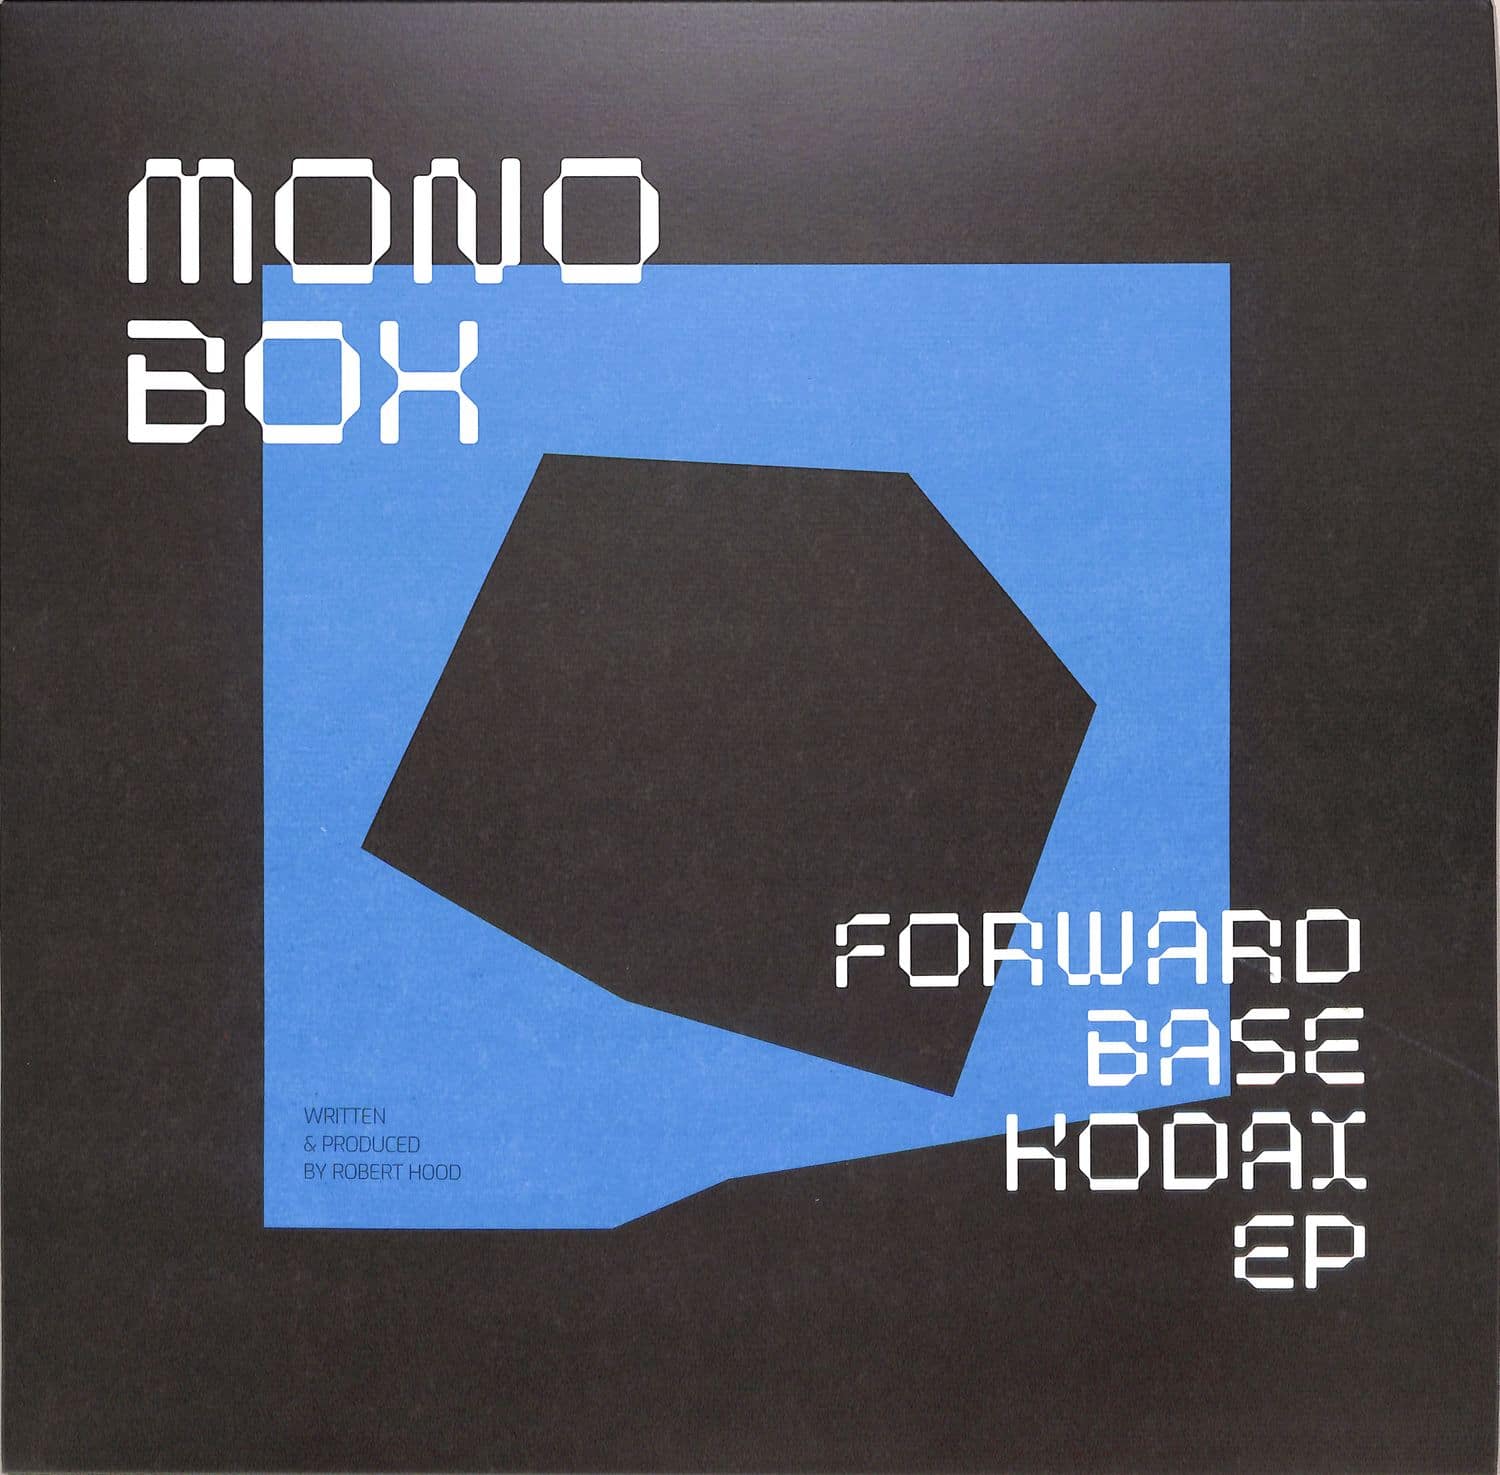 Monobox - FORWARDBASE KODAI EP